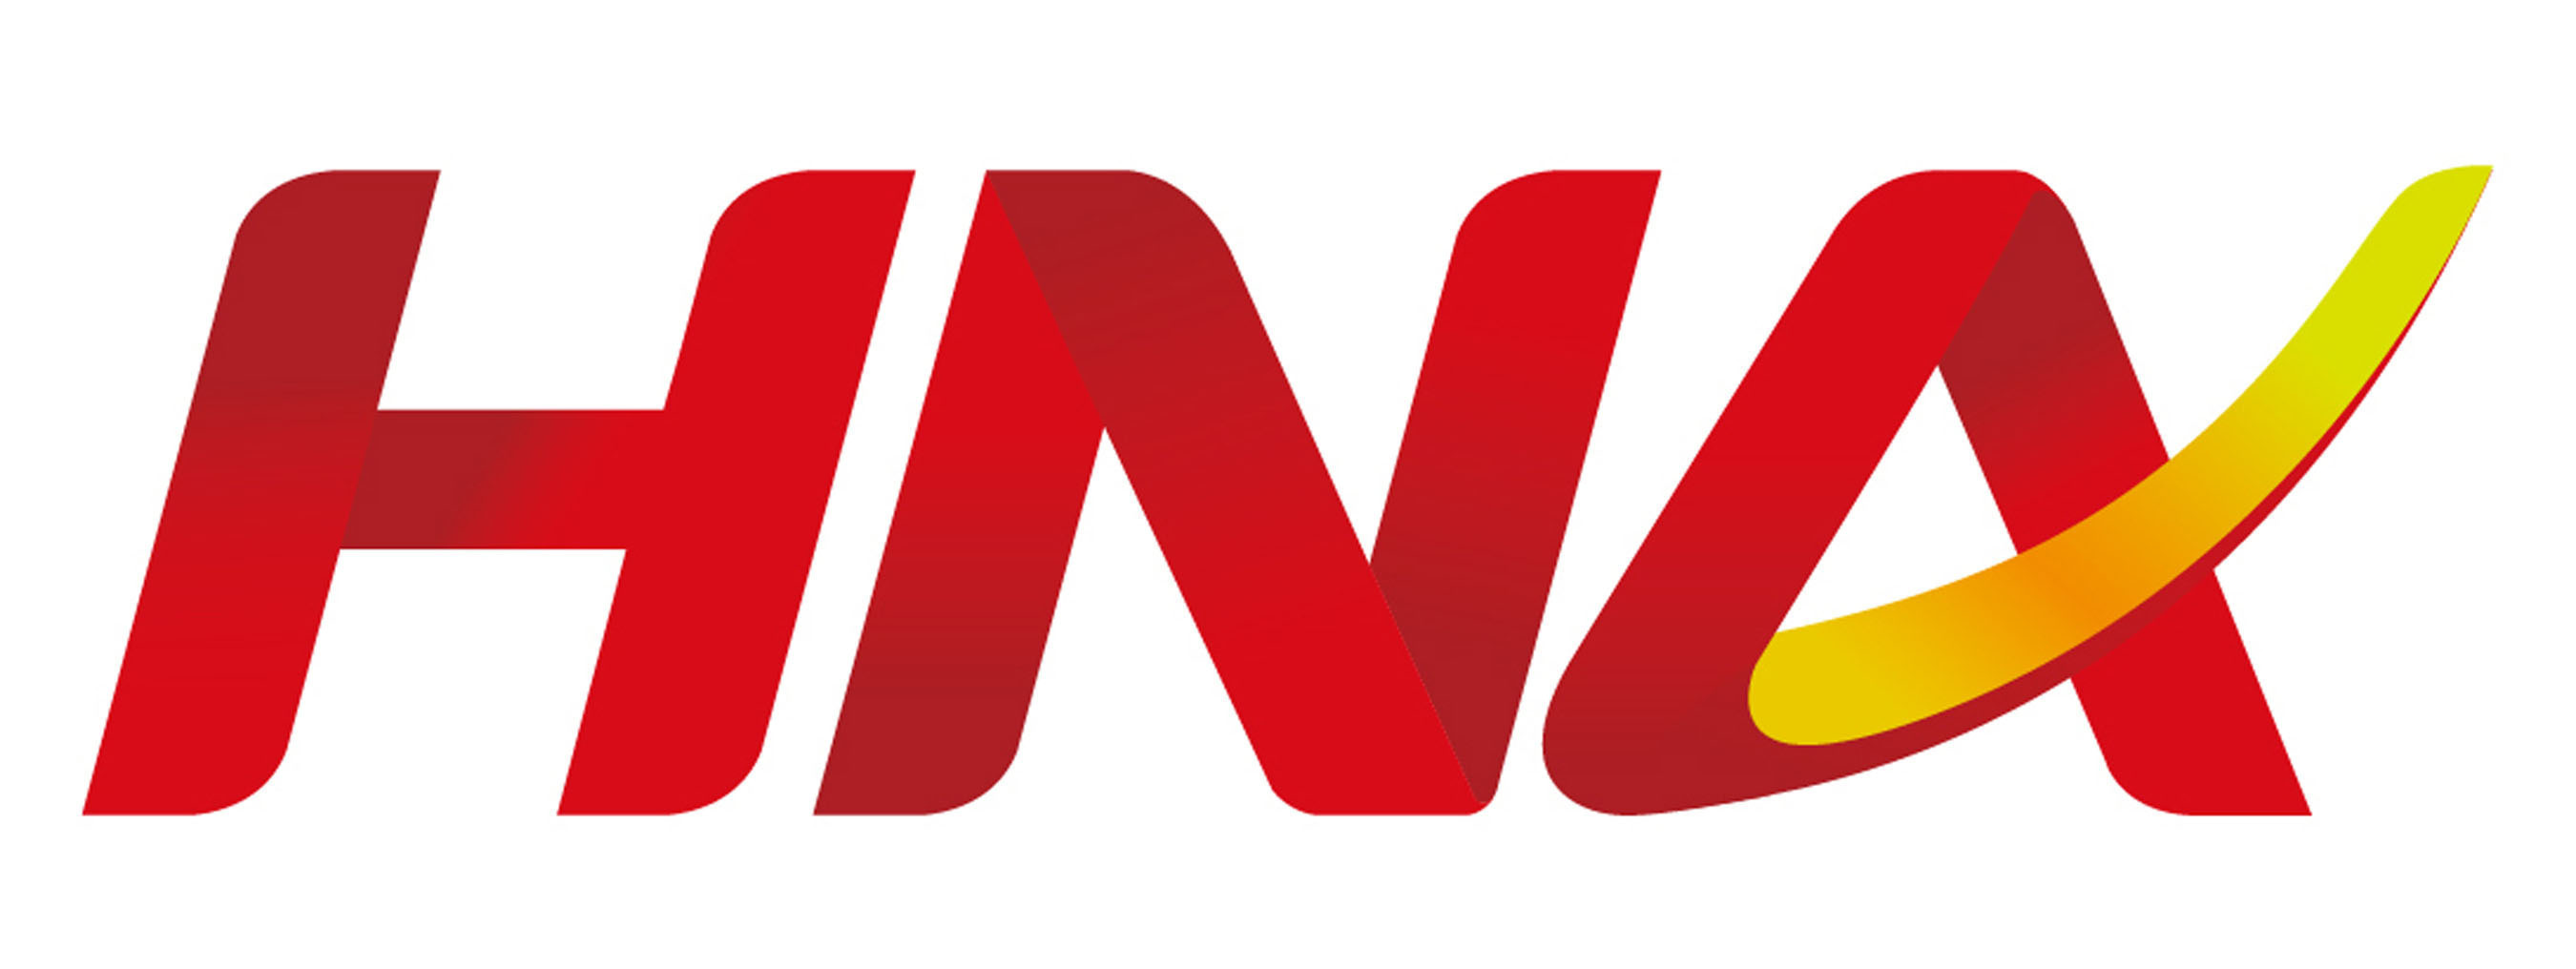 Resultado de imagen para HNA Group logo